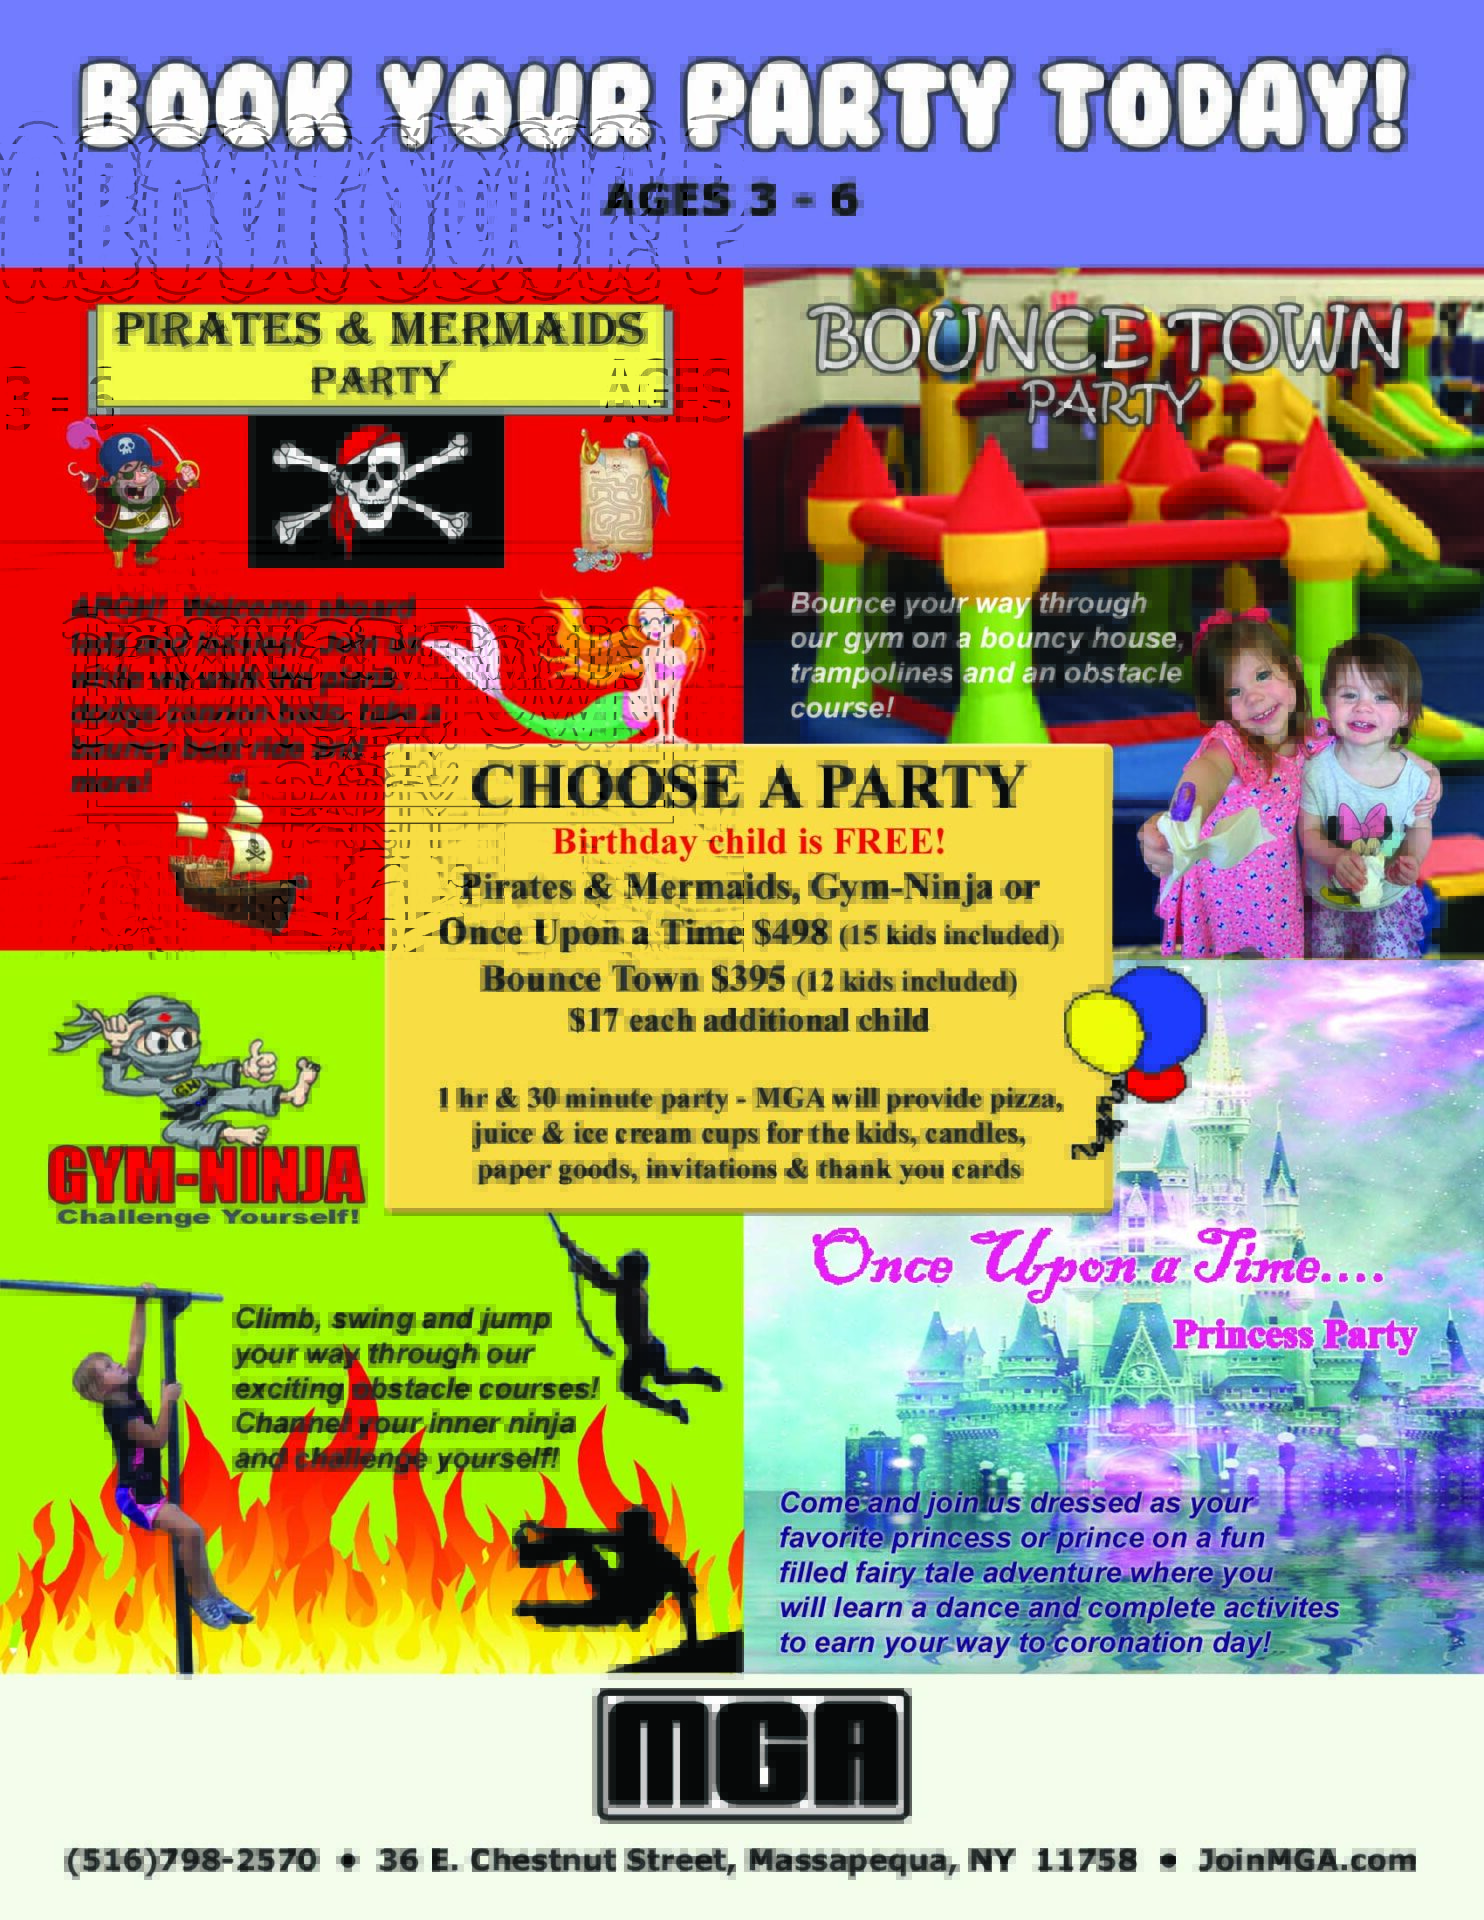 Party flyer ages 3-6 copy